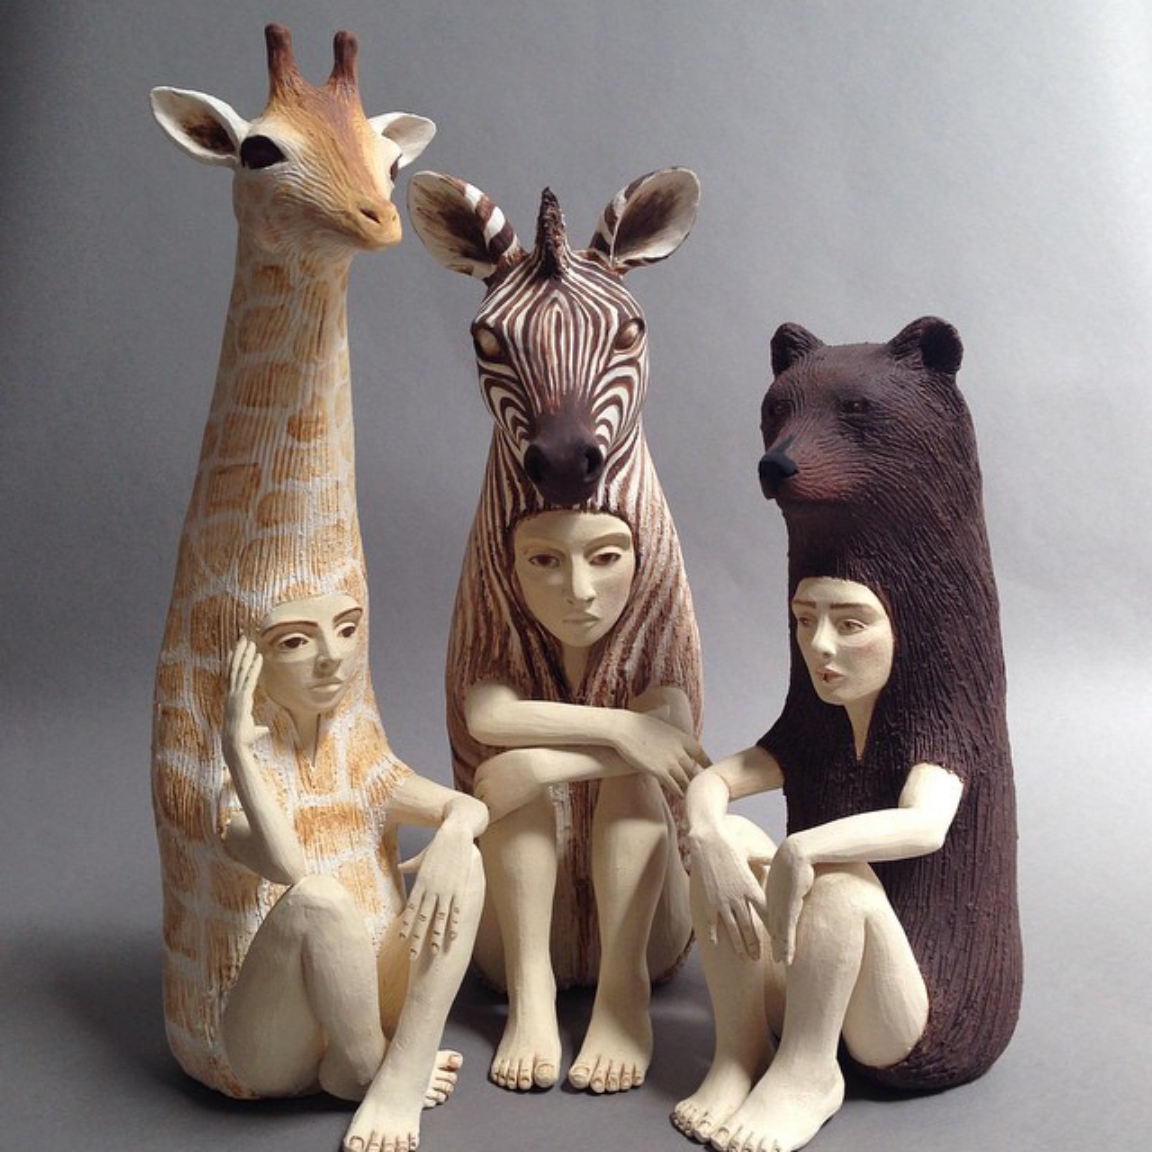 Crystal Morey's Striking Ceramic Sculptures Of Human Animal Hybrids (4)